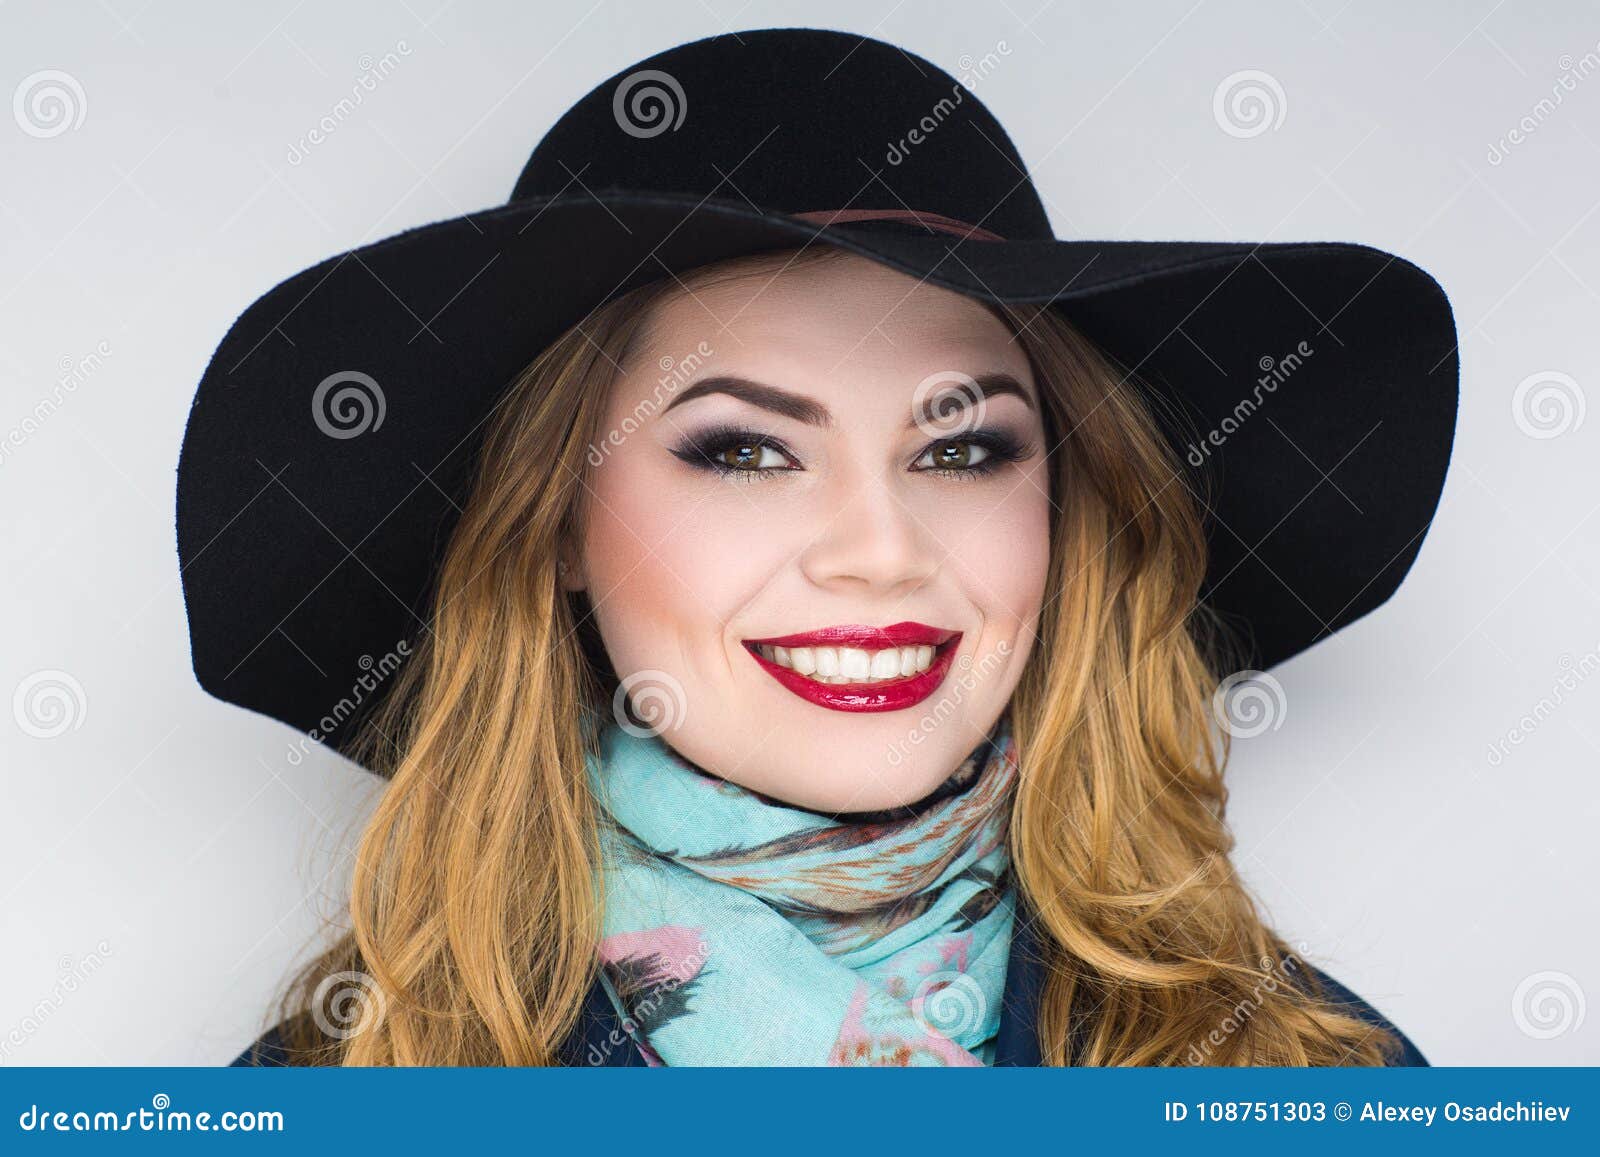 Woman black hat stock image. Image of portrait, pretty - 108751303